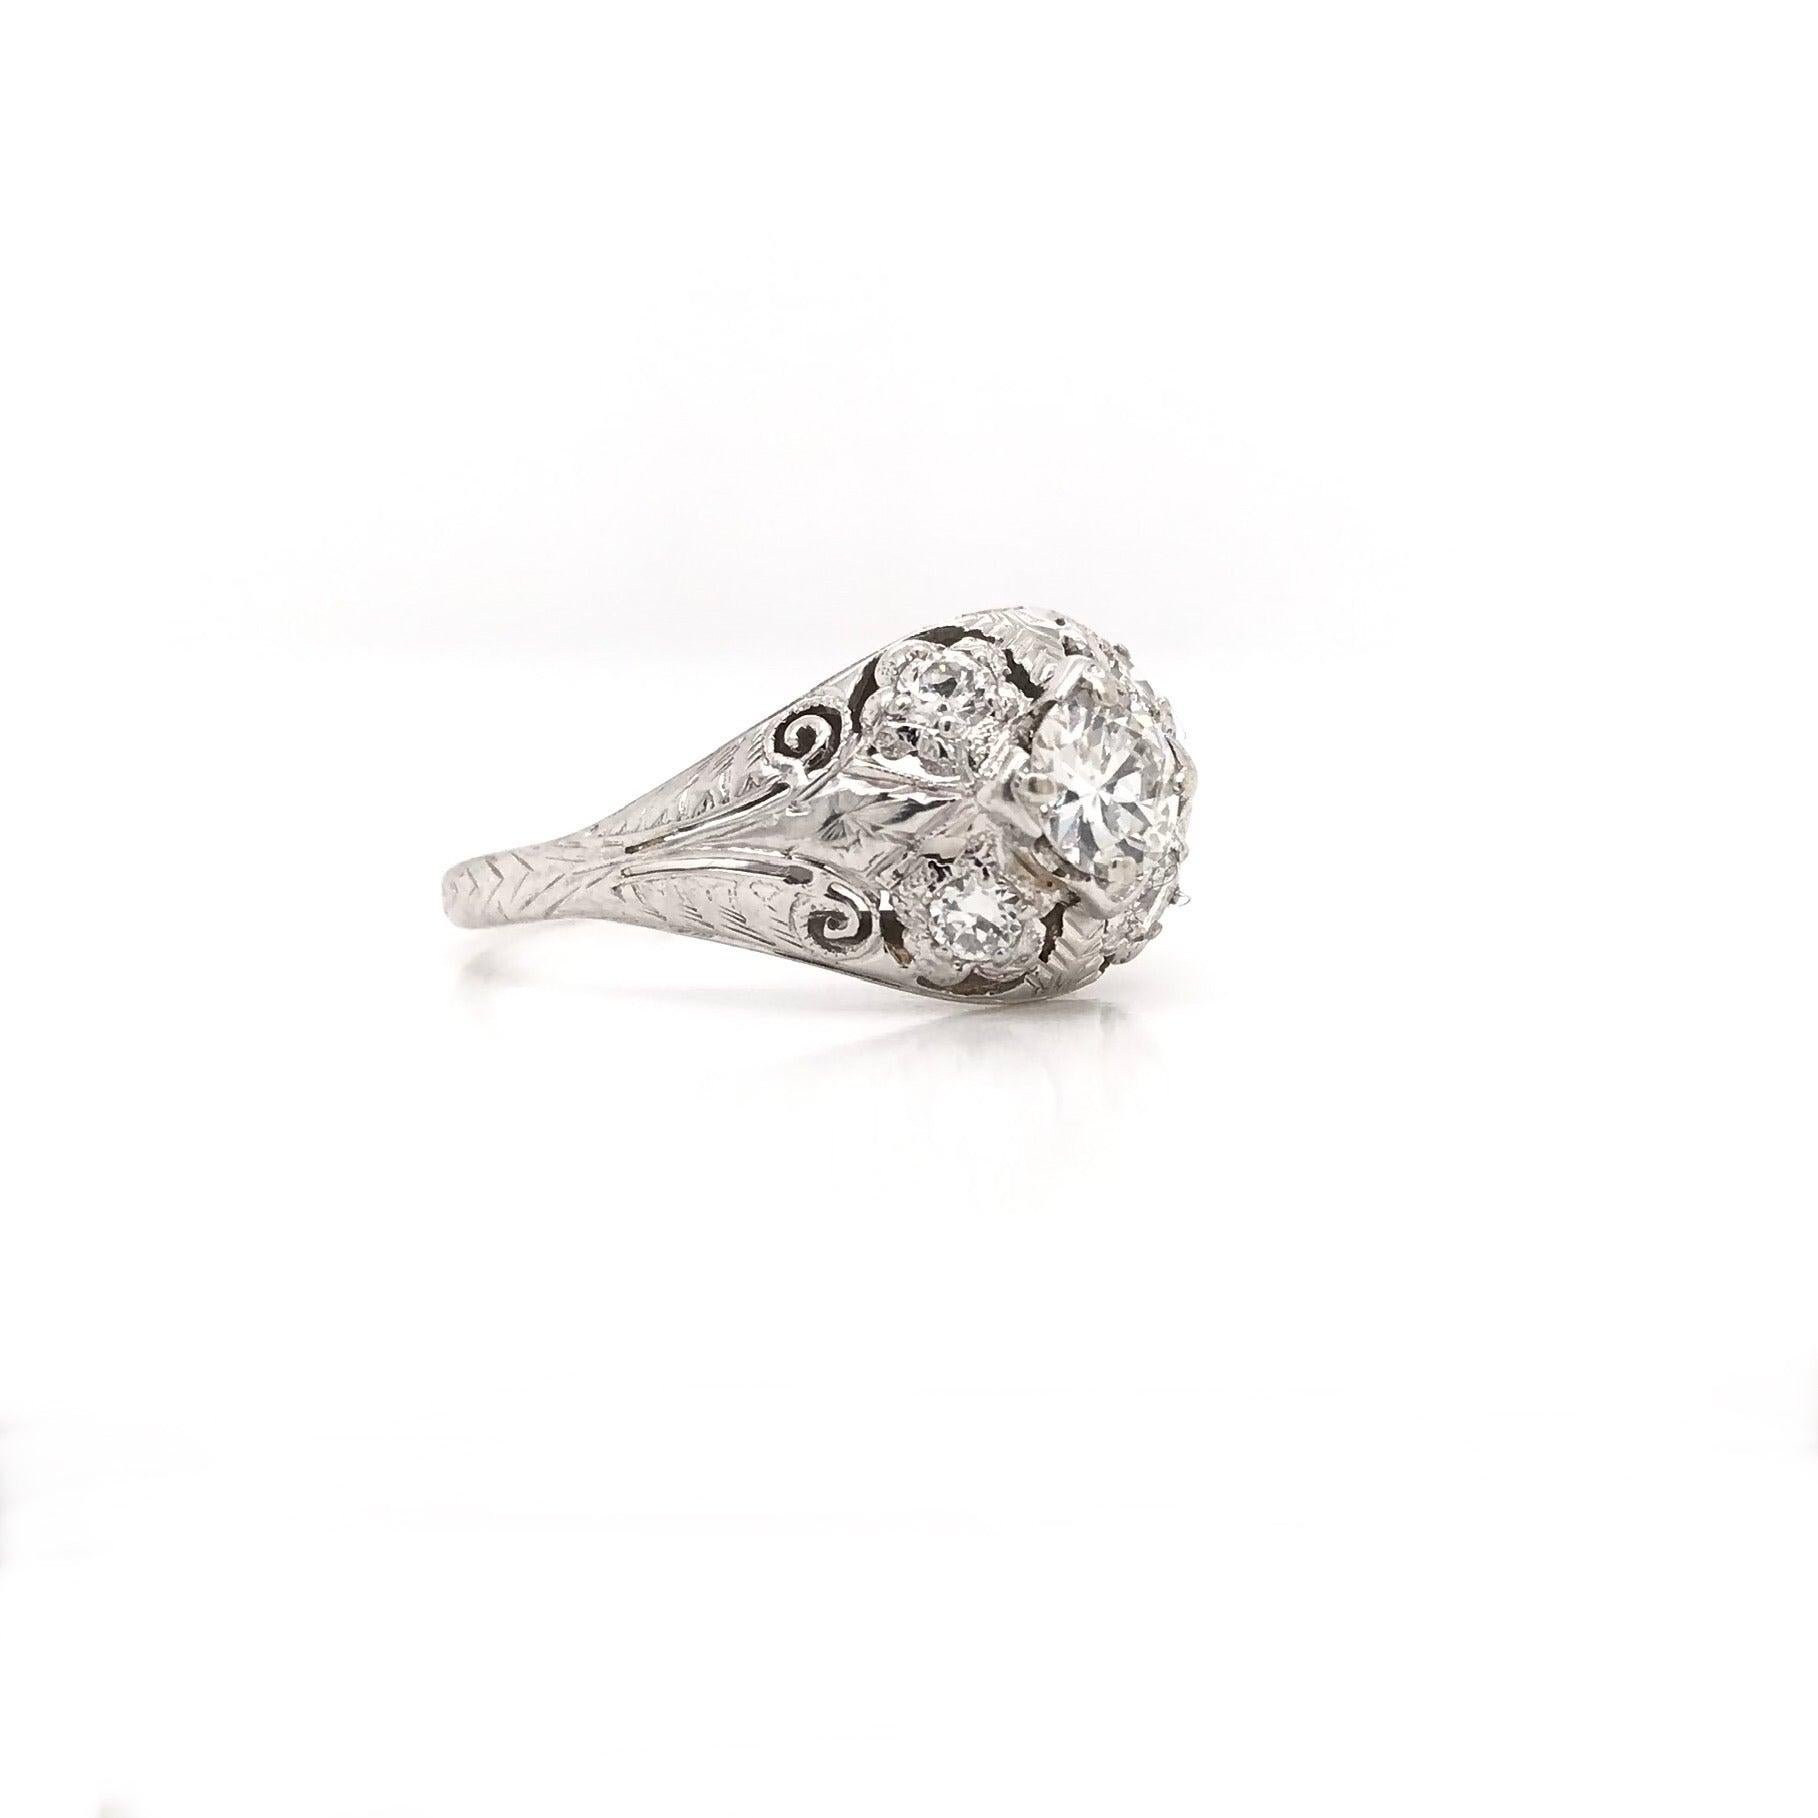 Women's Art Deco 0.45 Carat Diamond and Floral Filigree Ring